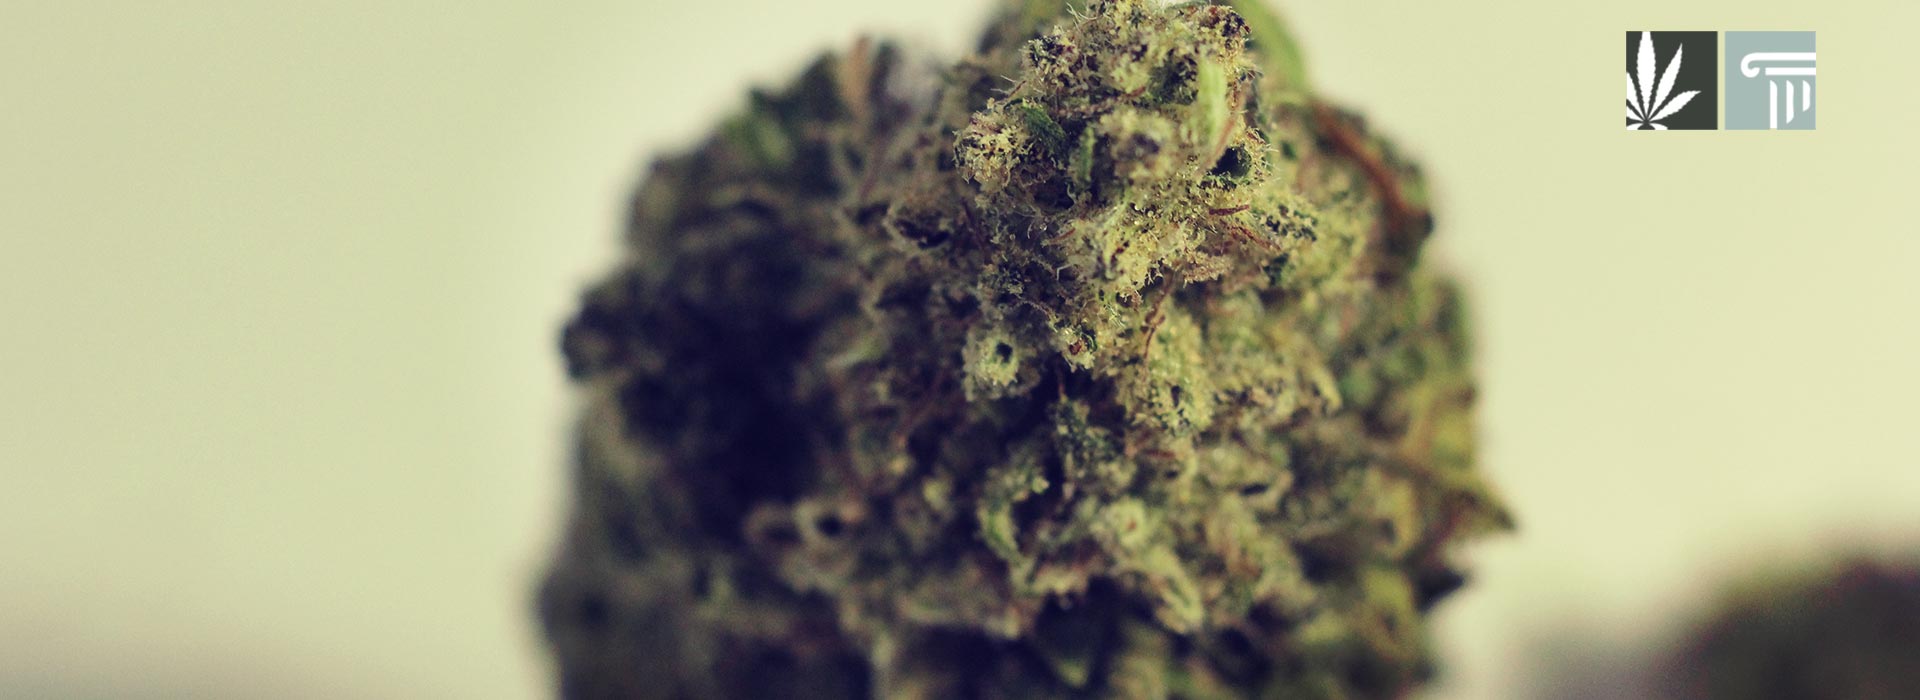 Ohio Republicans File New Marijuana Legalization Bill